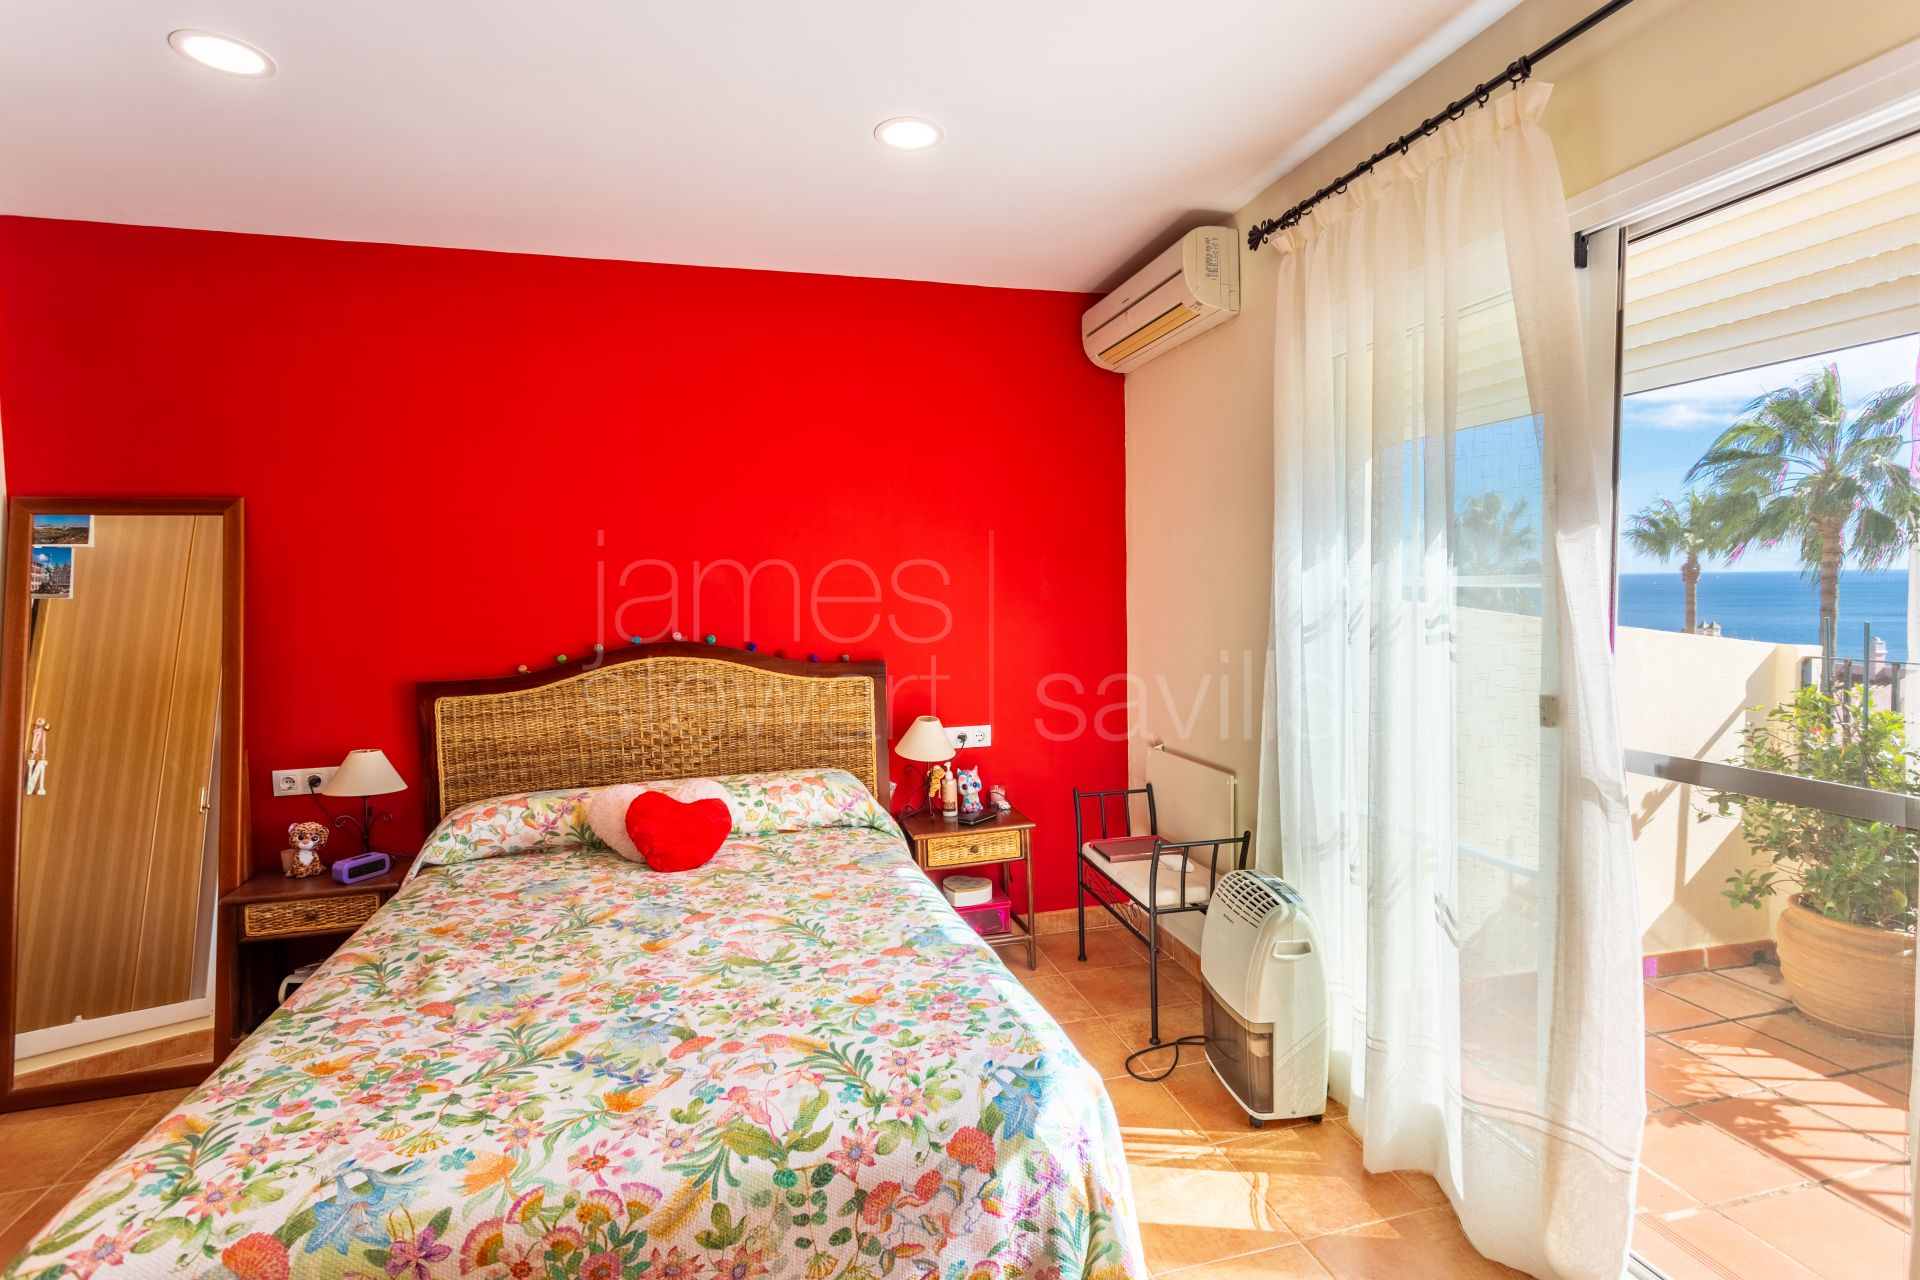 5 Bedroom semi-detached house in La Alcaidesa with exceptional sea views